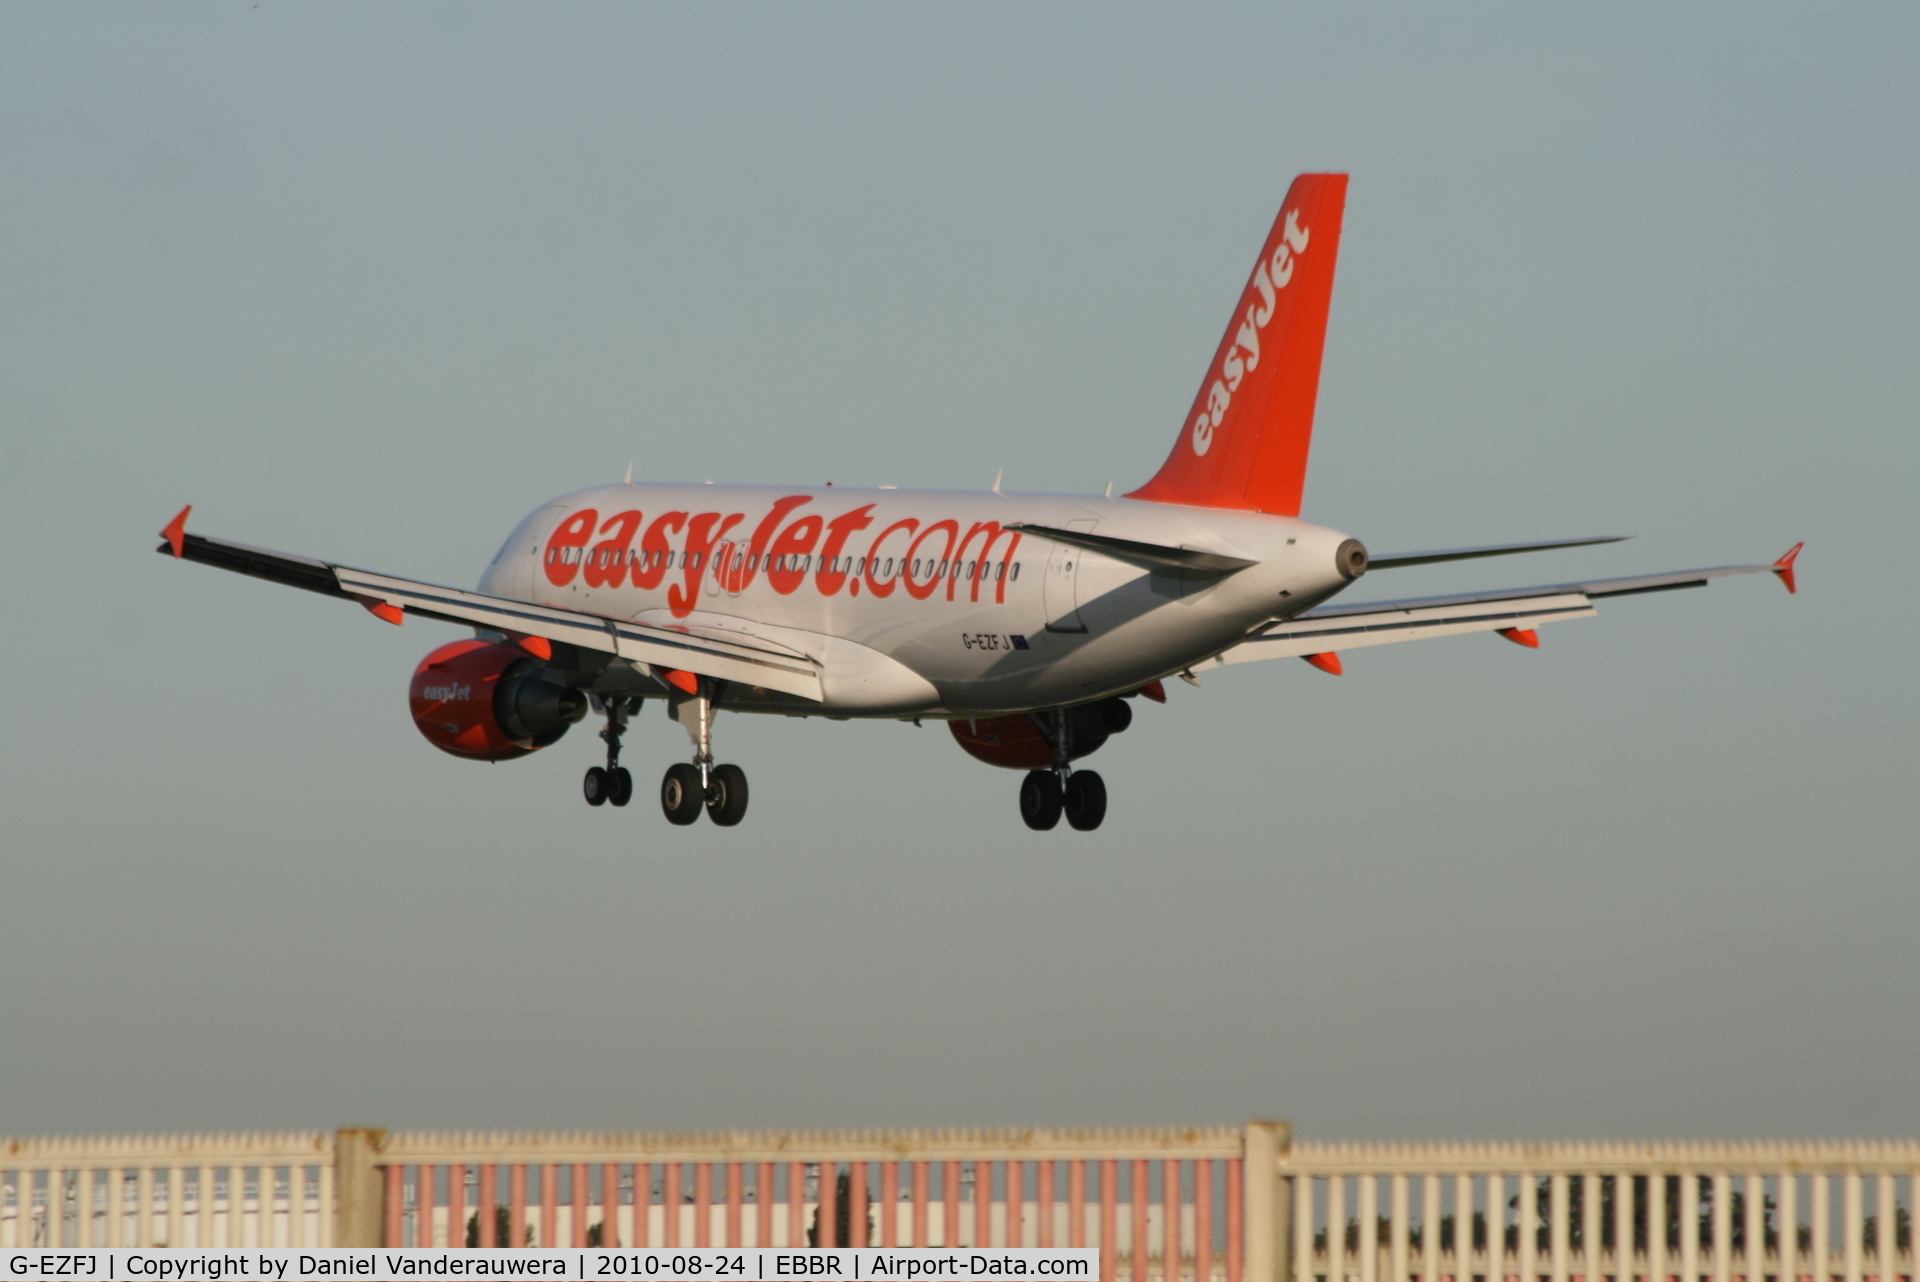 G-EZFJ, 2009 Airbus A319-111 C/N 4040, Flight EZY4701 is descending to RWY 25L